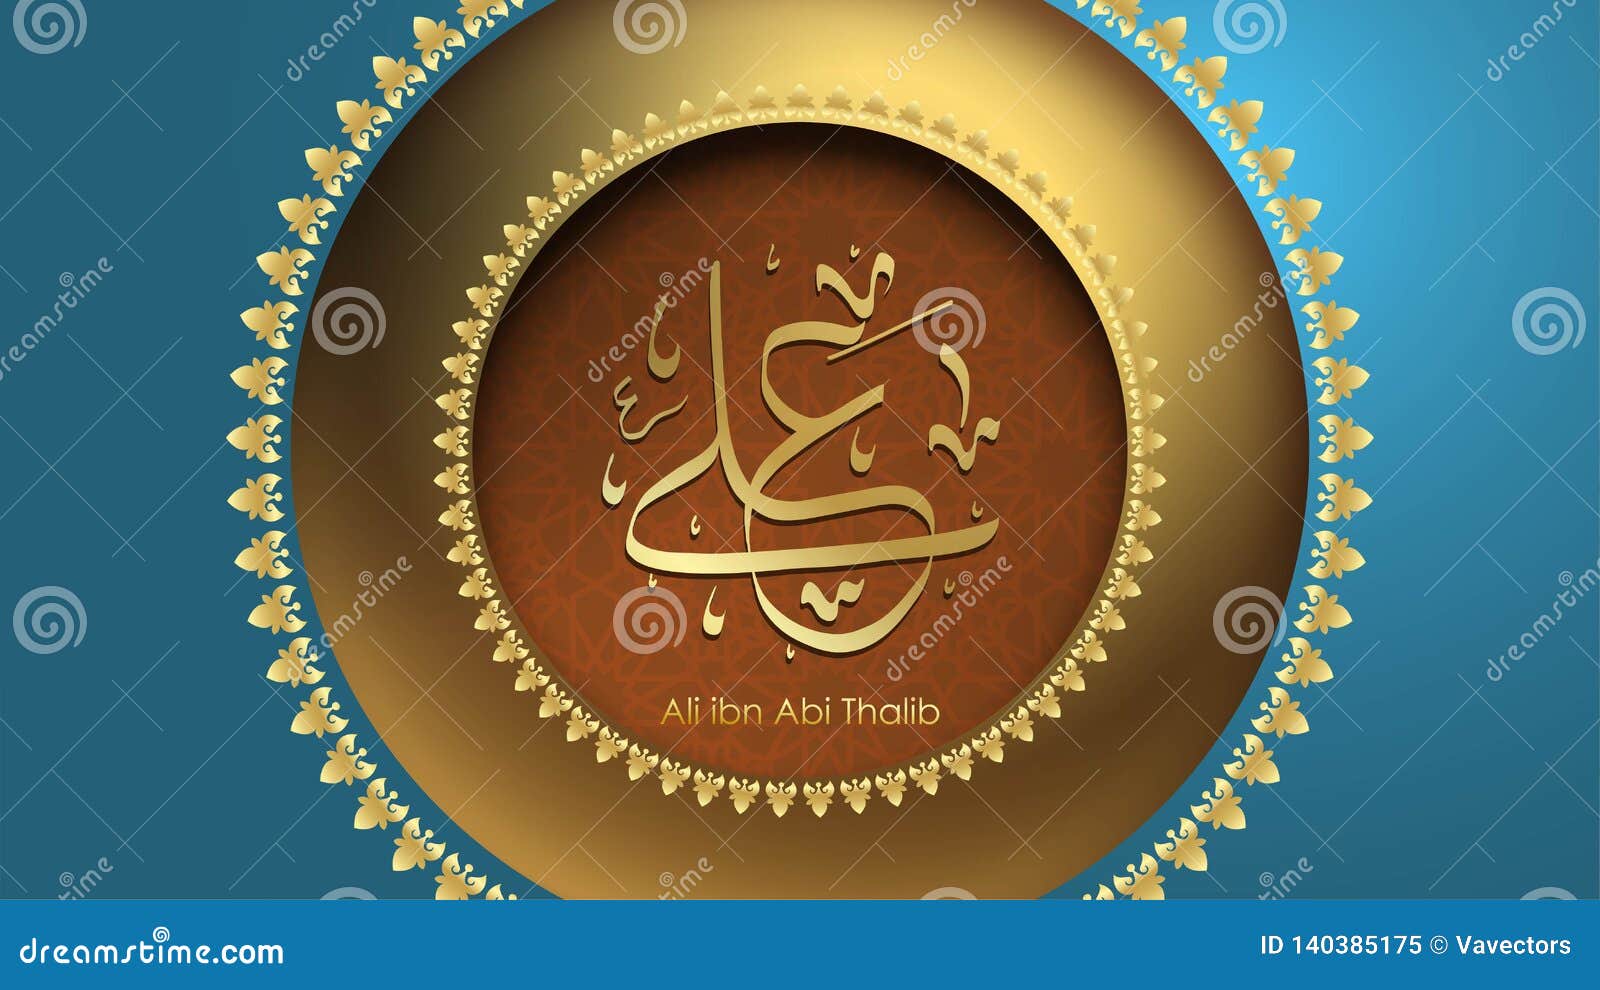 Arabic Hazrat Ali Bin Abi Thalib Greeting Card Template Islamic ...